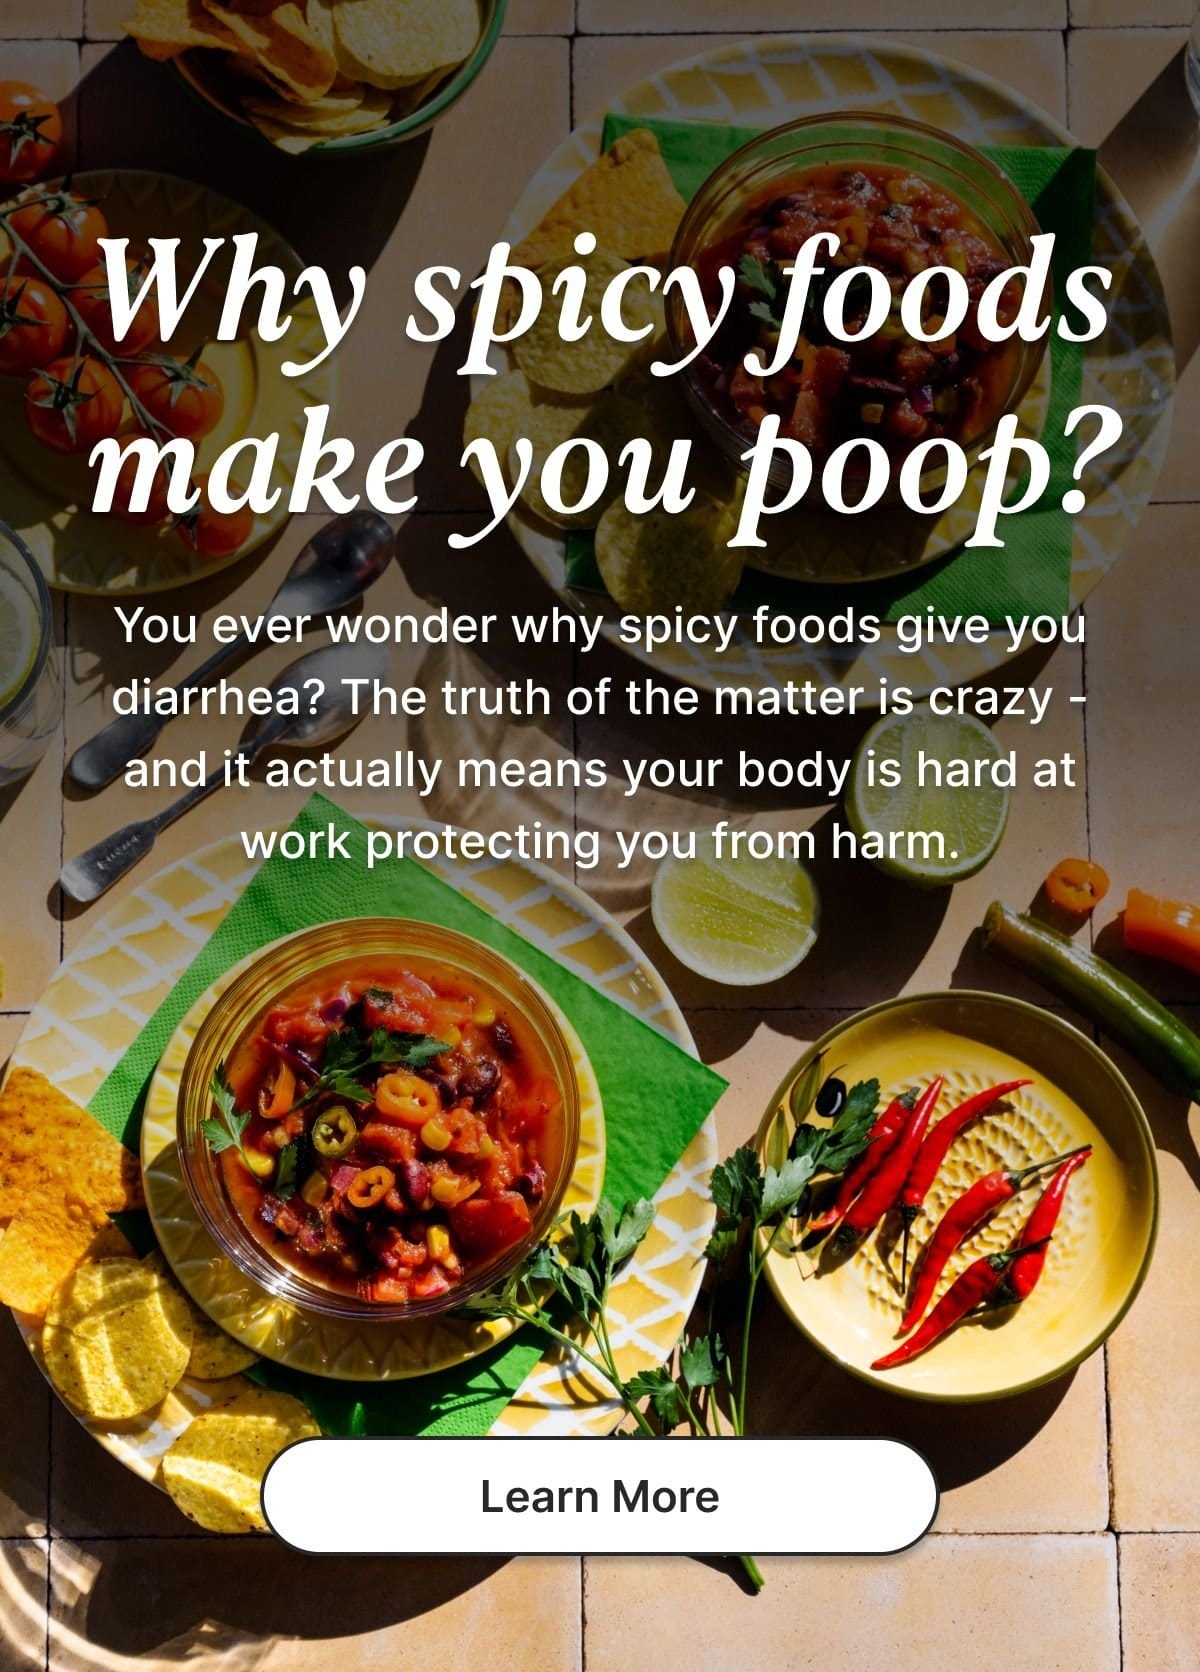 Why spicy foods make you poop?